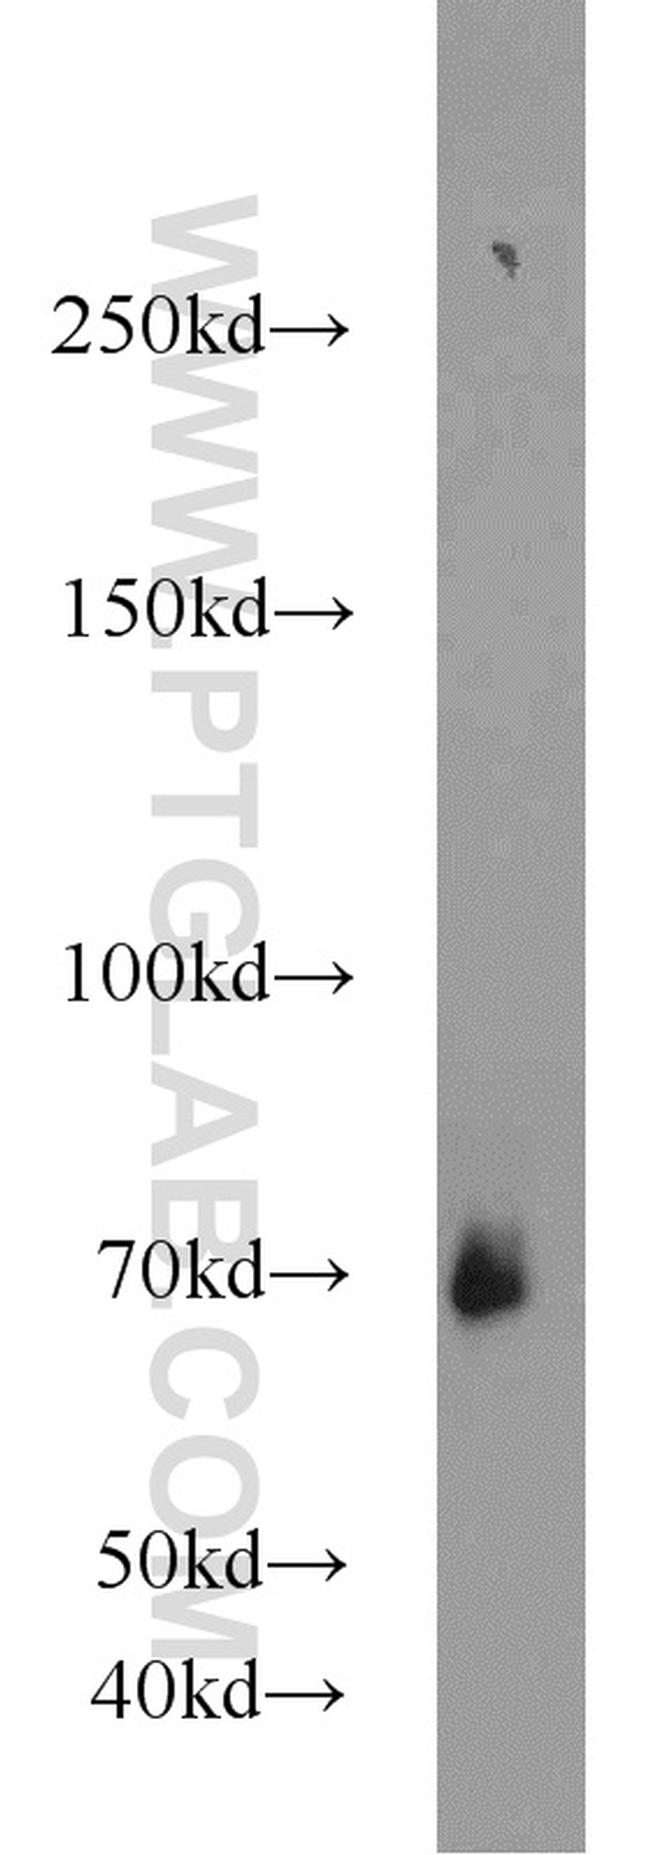 CSGALNACT2 Antibody in Western Blot (WB)